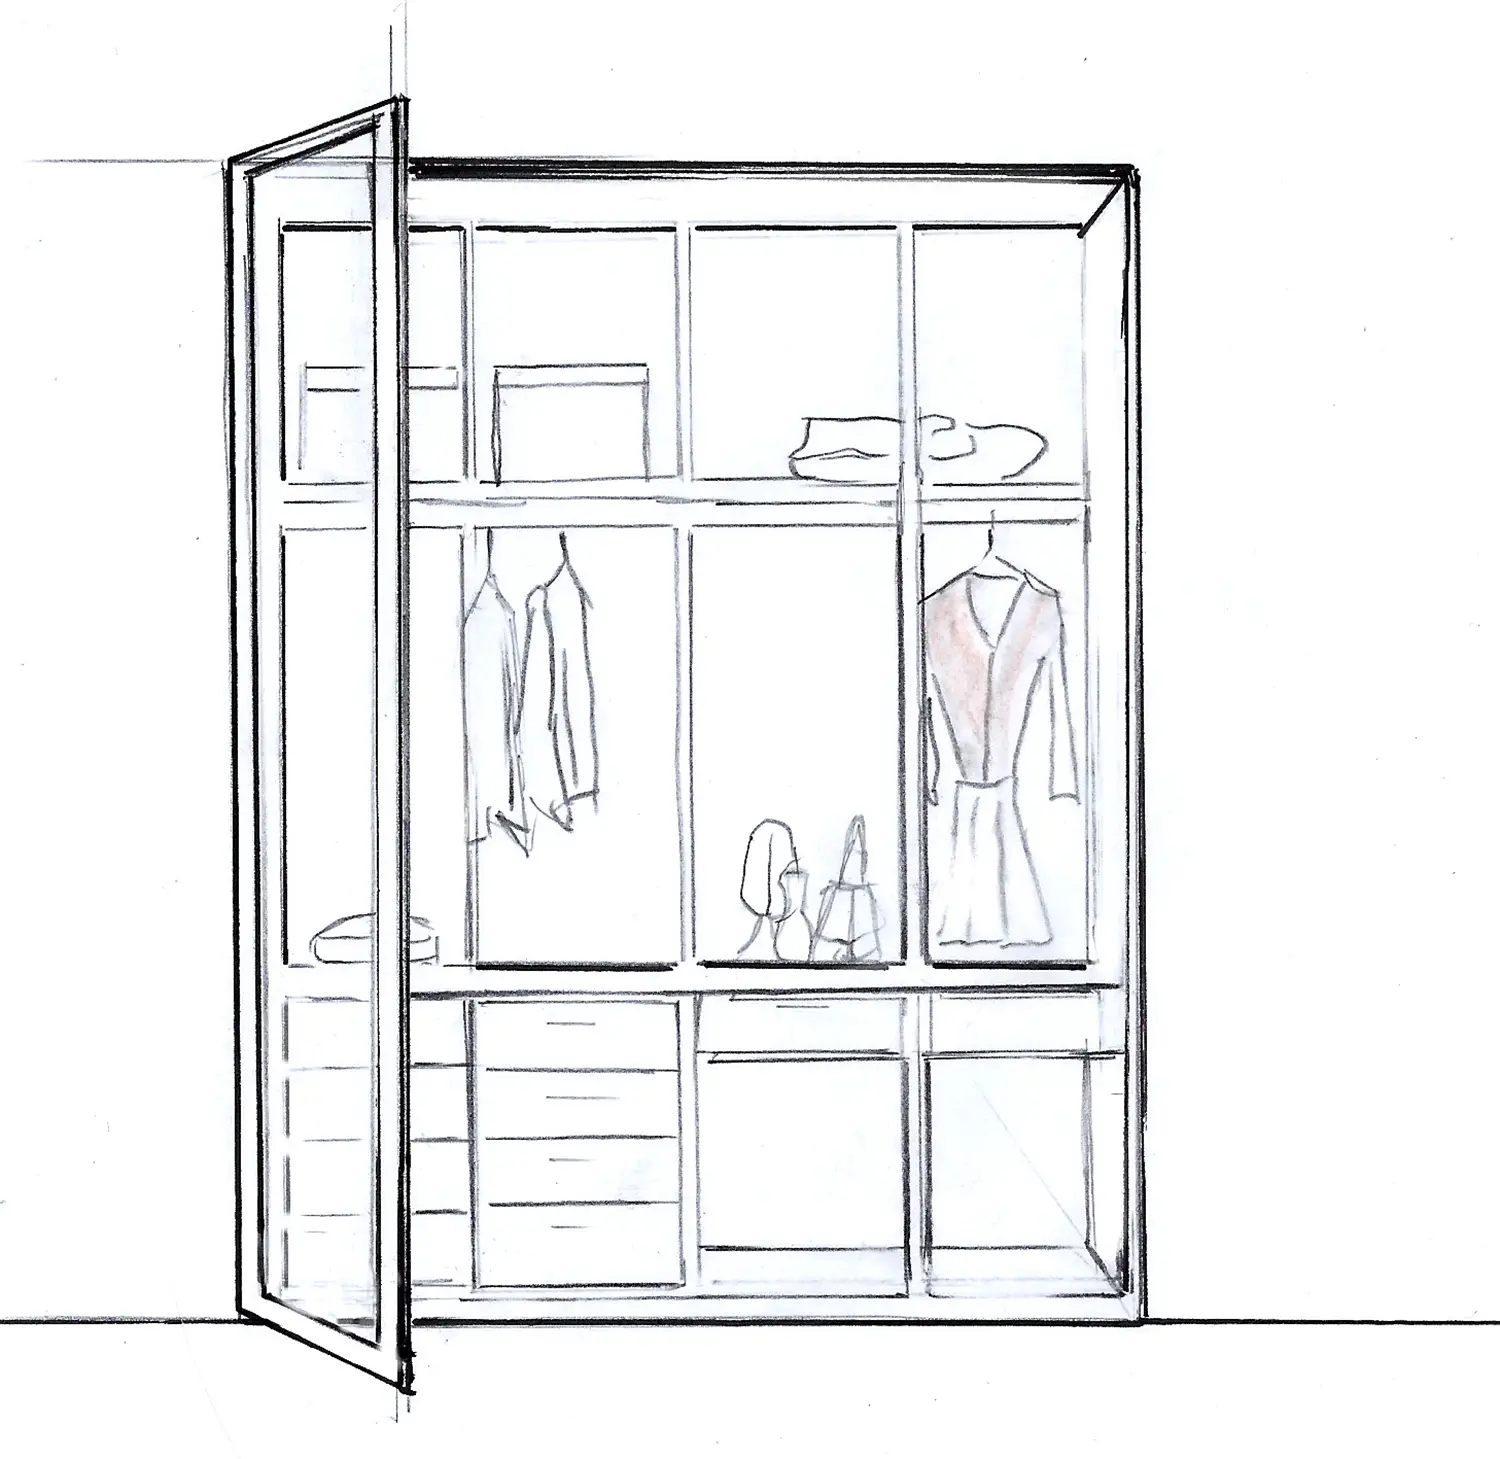 2D sketch of a walk-in closet designed by interior designer Stefania Luraghi.